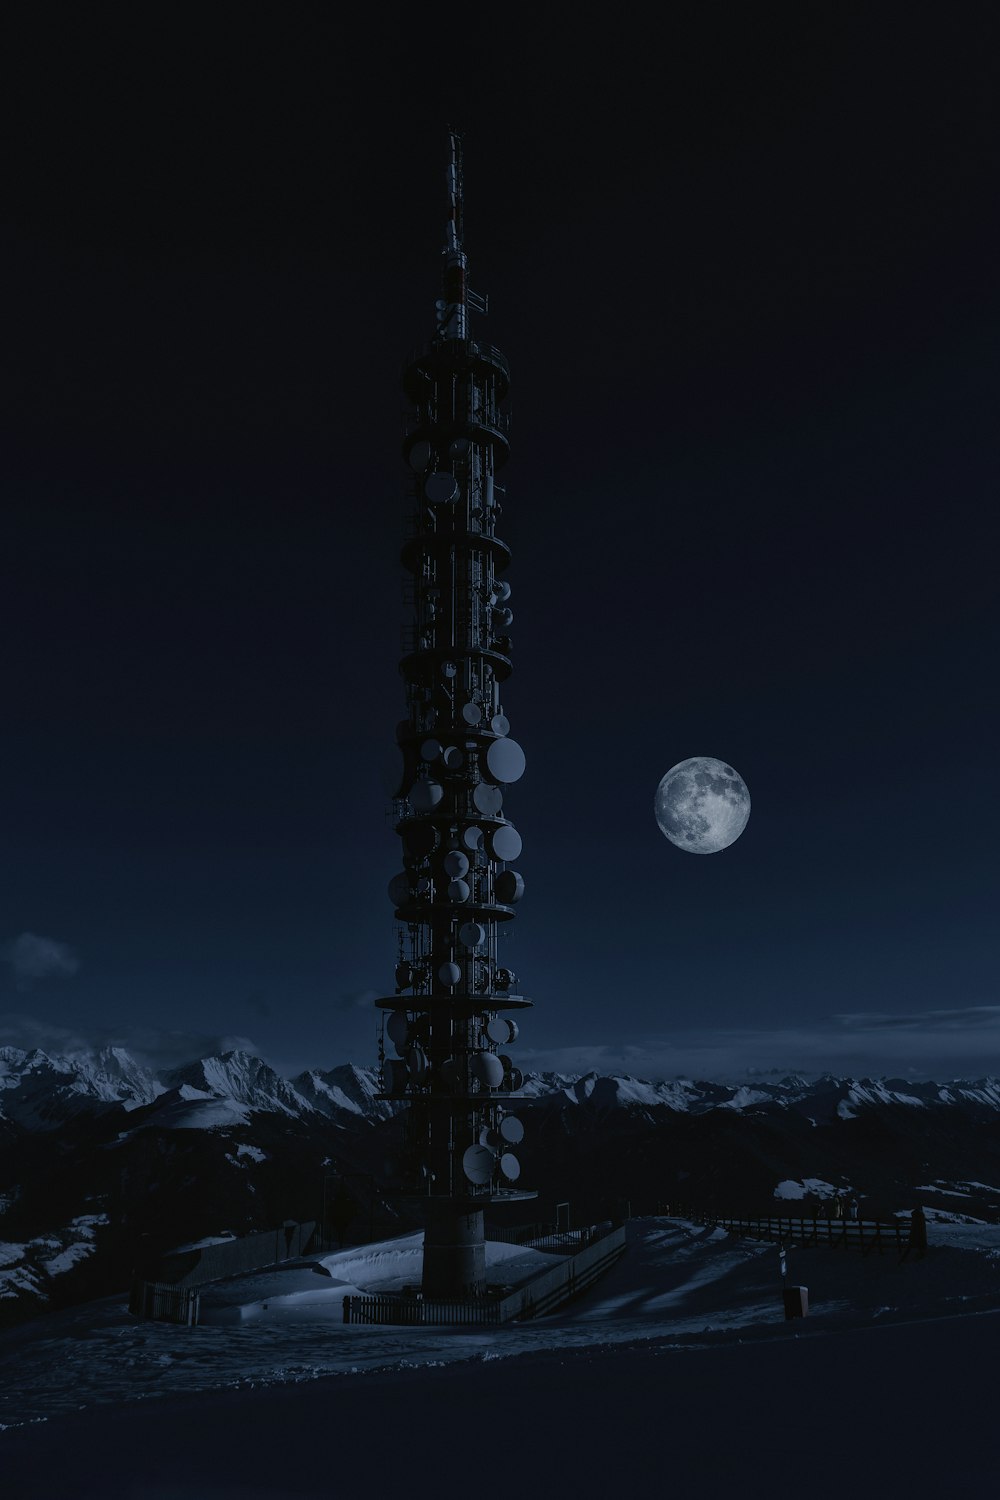 Torre sulla neve sotto la luna piena